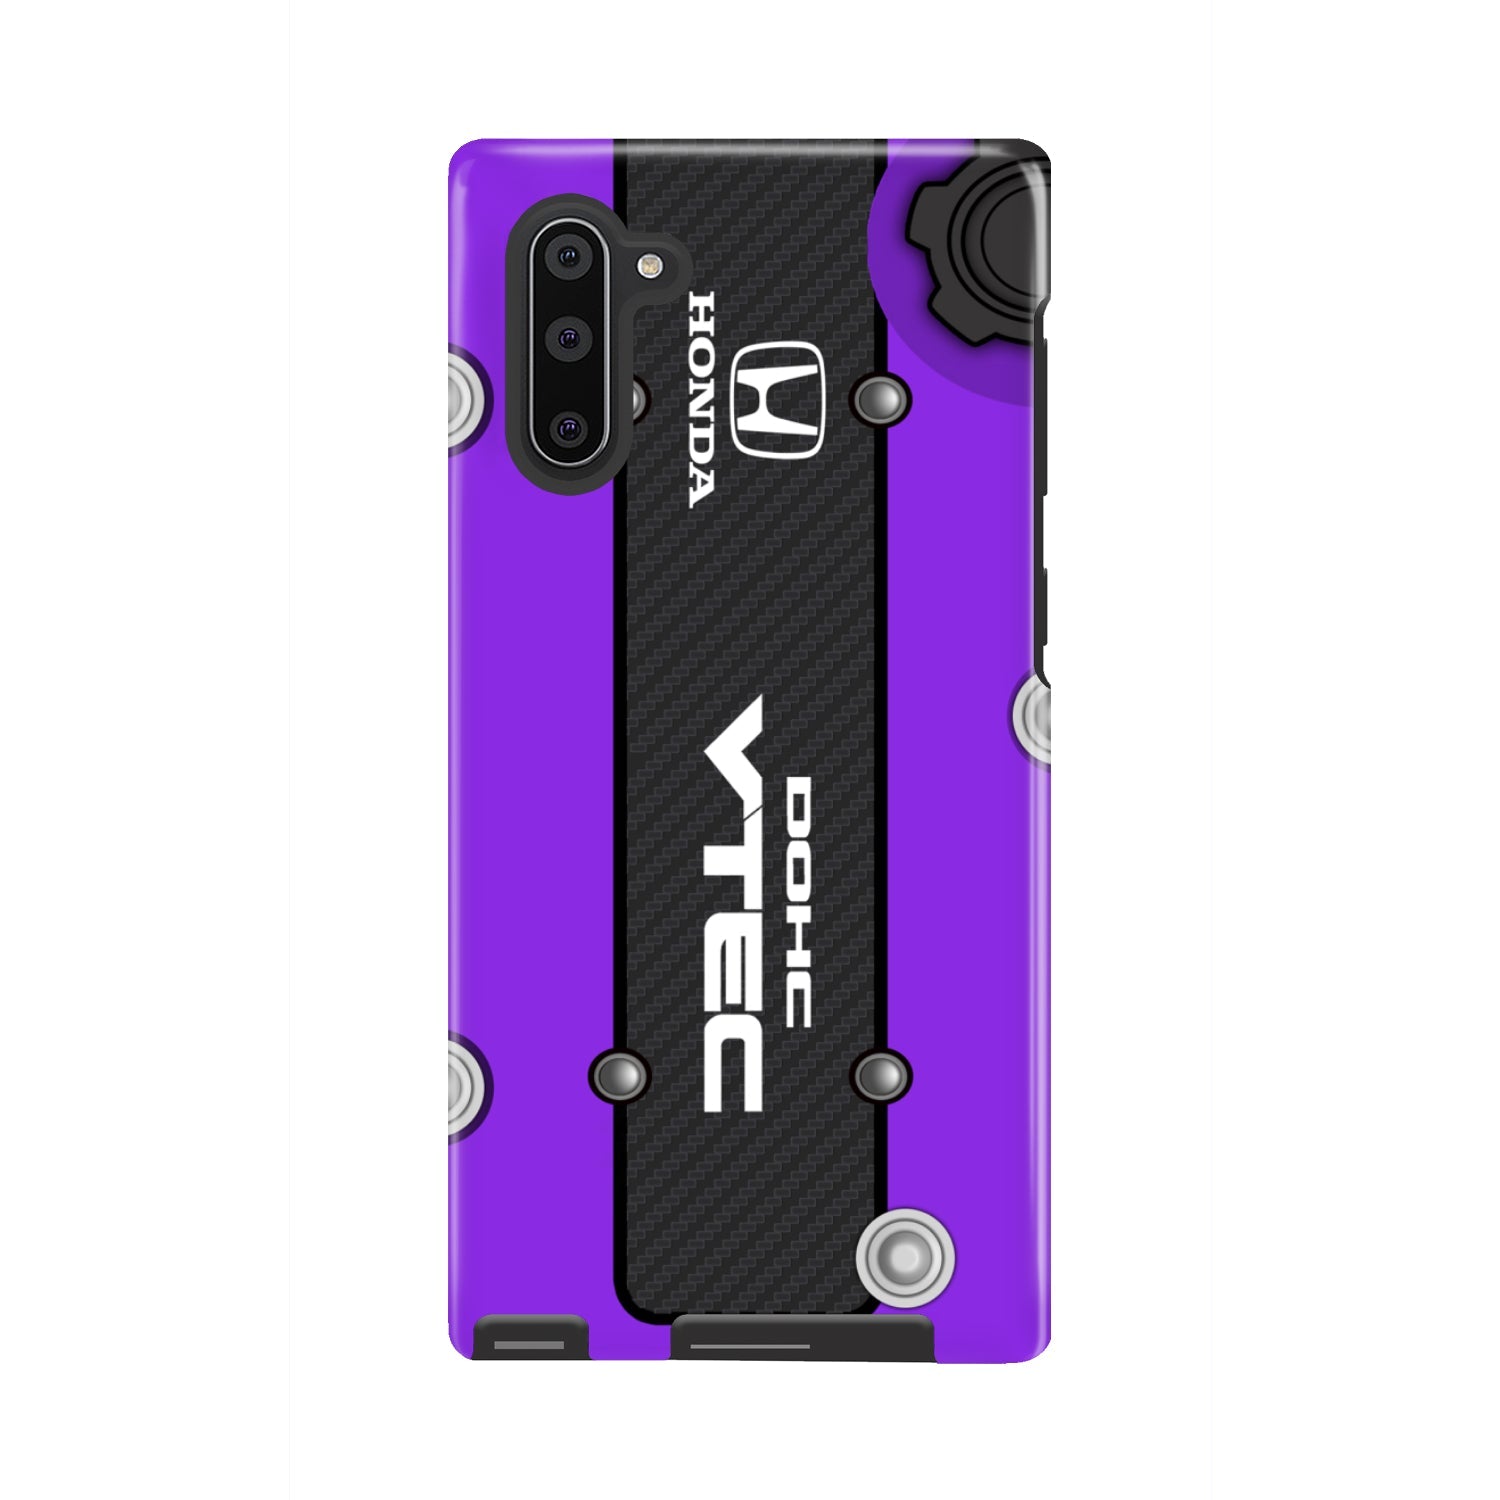 Purple F Series Tough Case